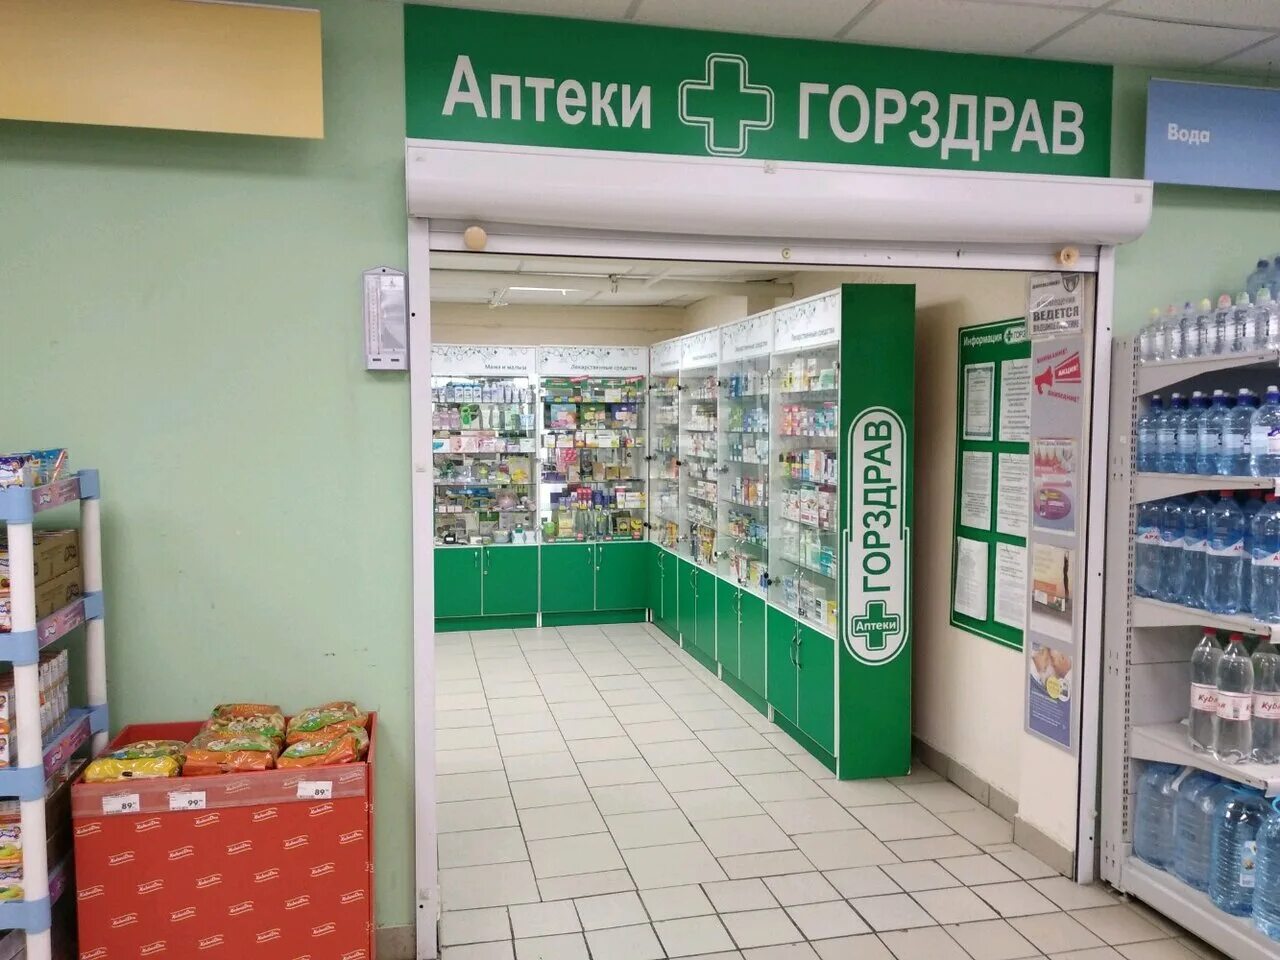 Интернет аптека горздрав с доставкой. Аптека ГОРЗДРАВ. ГОРЗДРАВ аптека Москва. Аптека ГОРЗДРАВ логотип. ГОРЗДРАВ фотосессия аптеки.